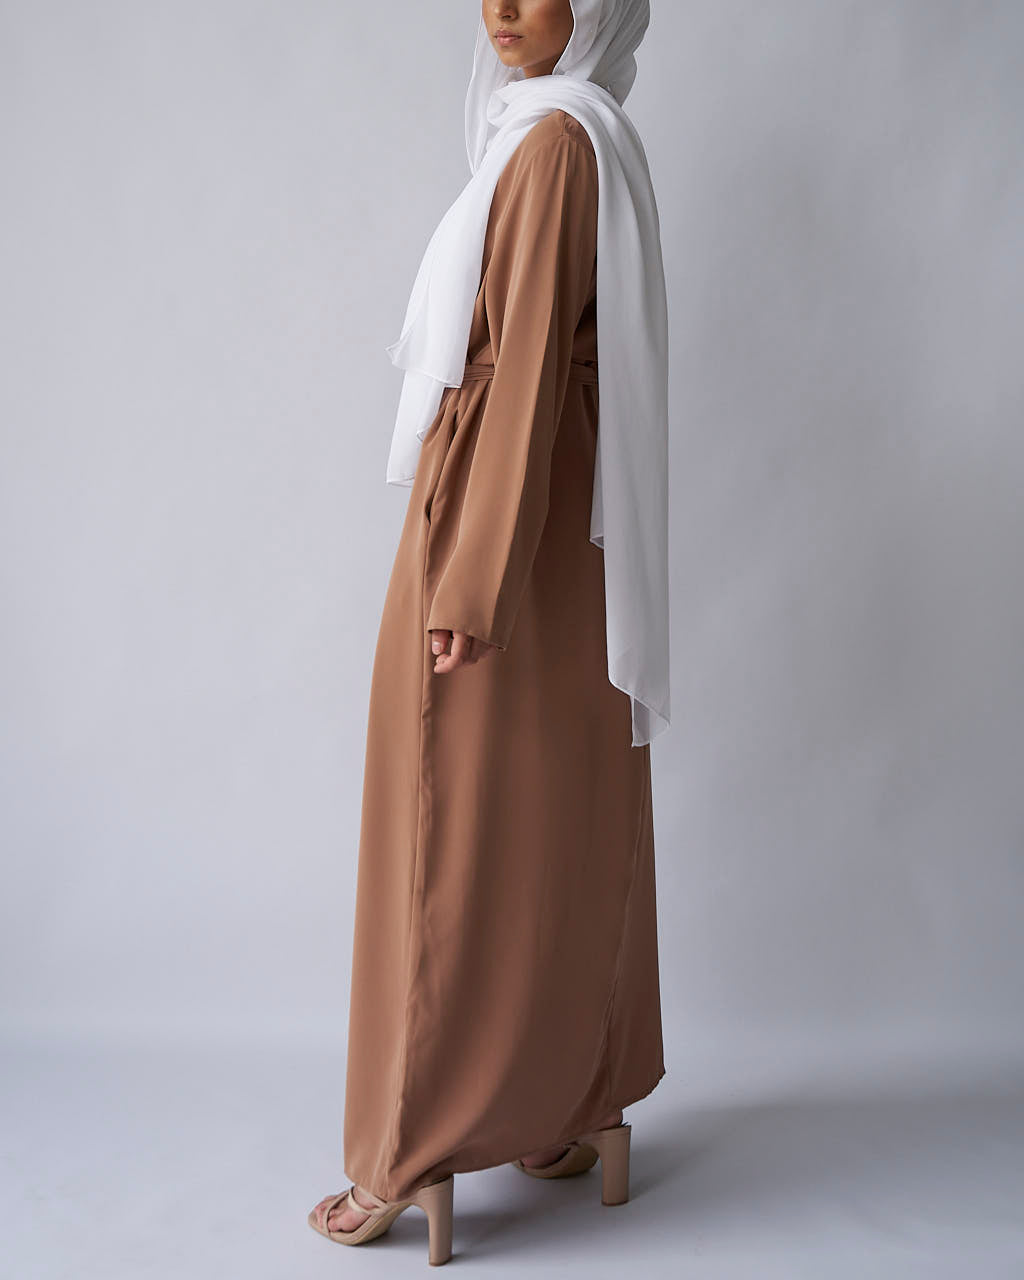 Essential Abaya - Brown - Essential Abaya - Fajr Noor